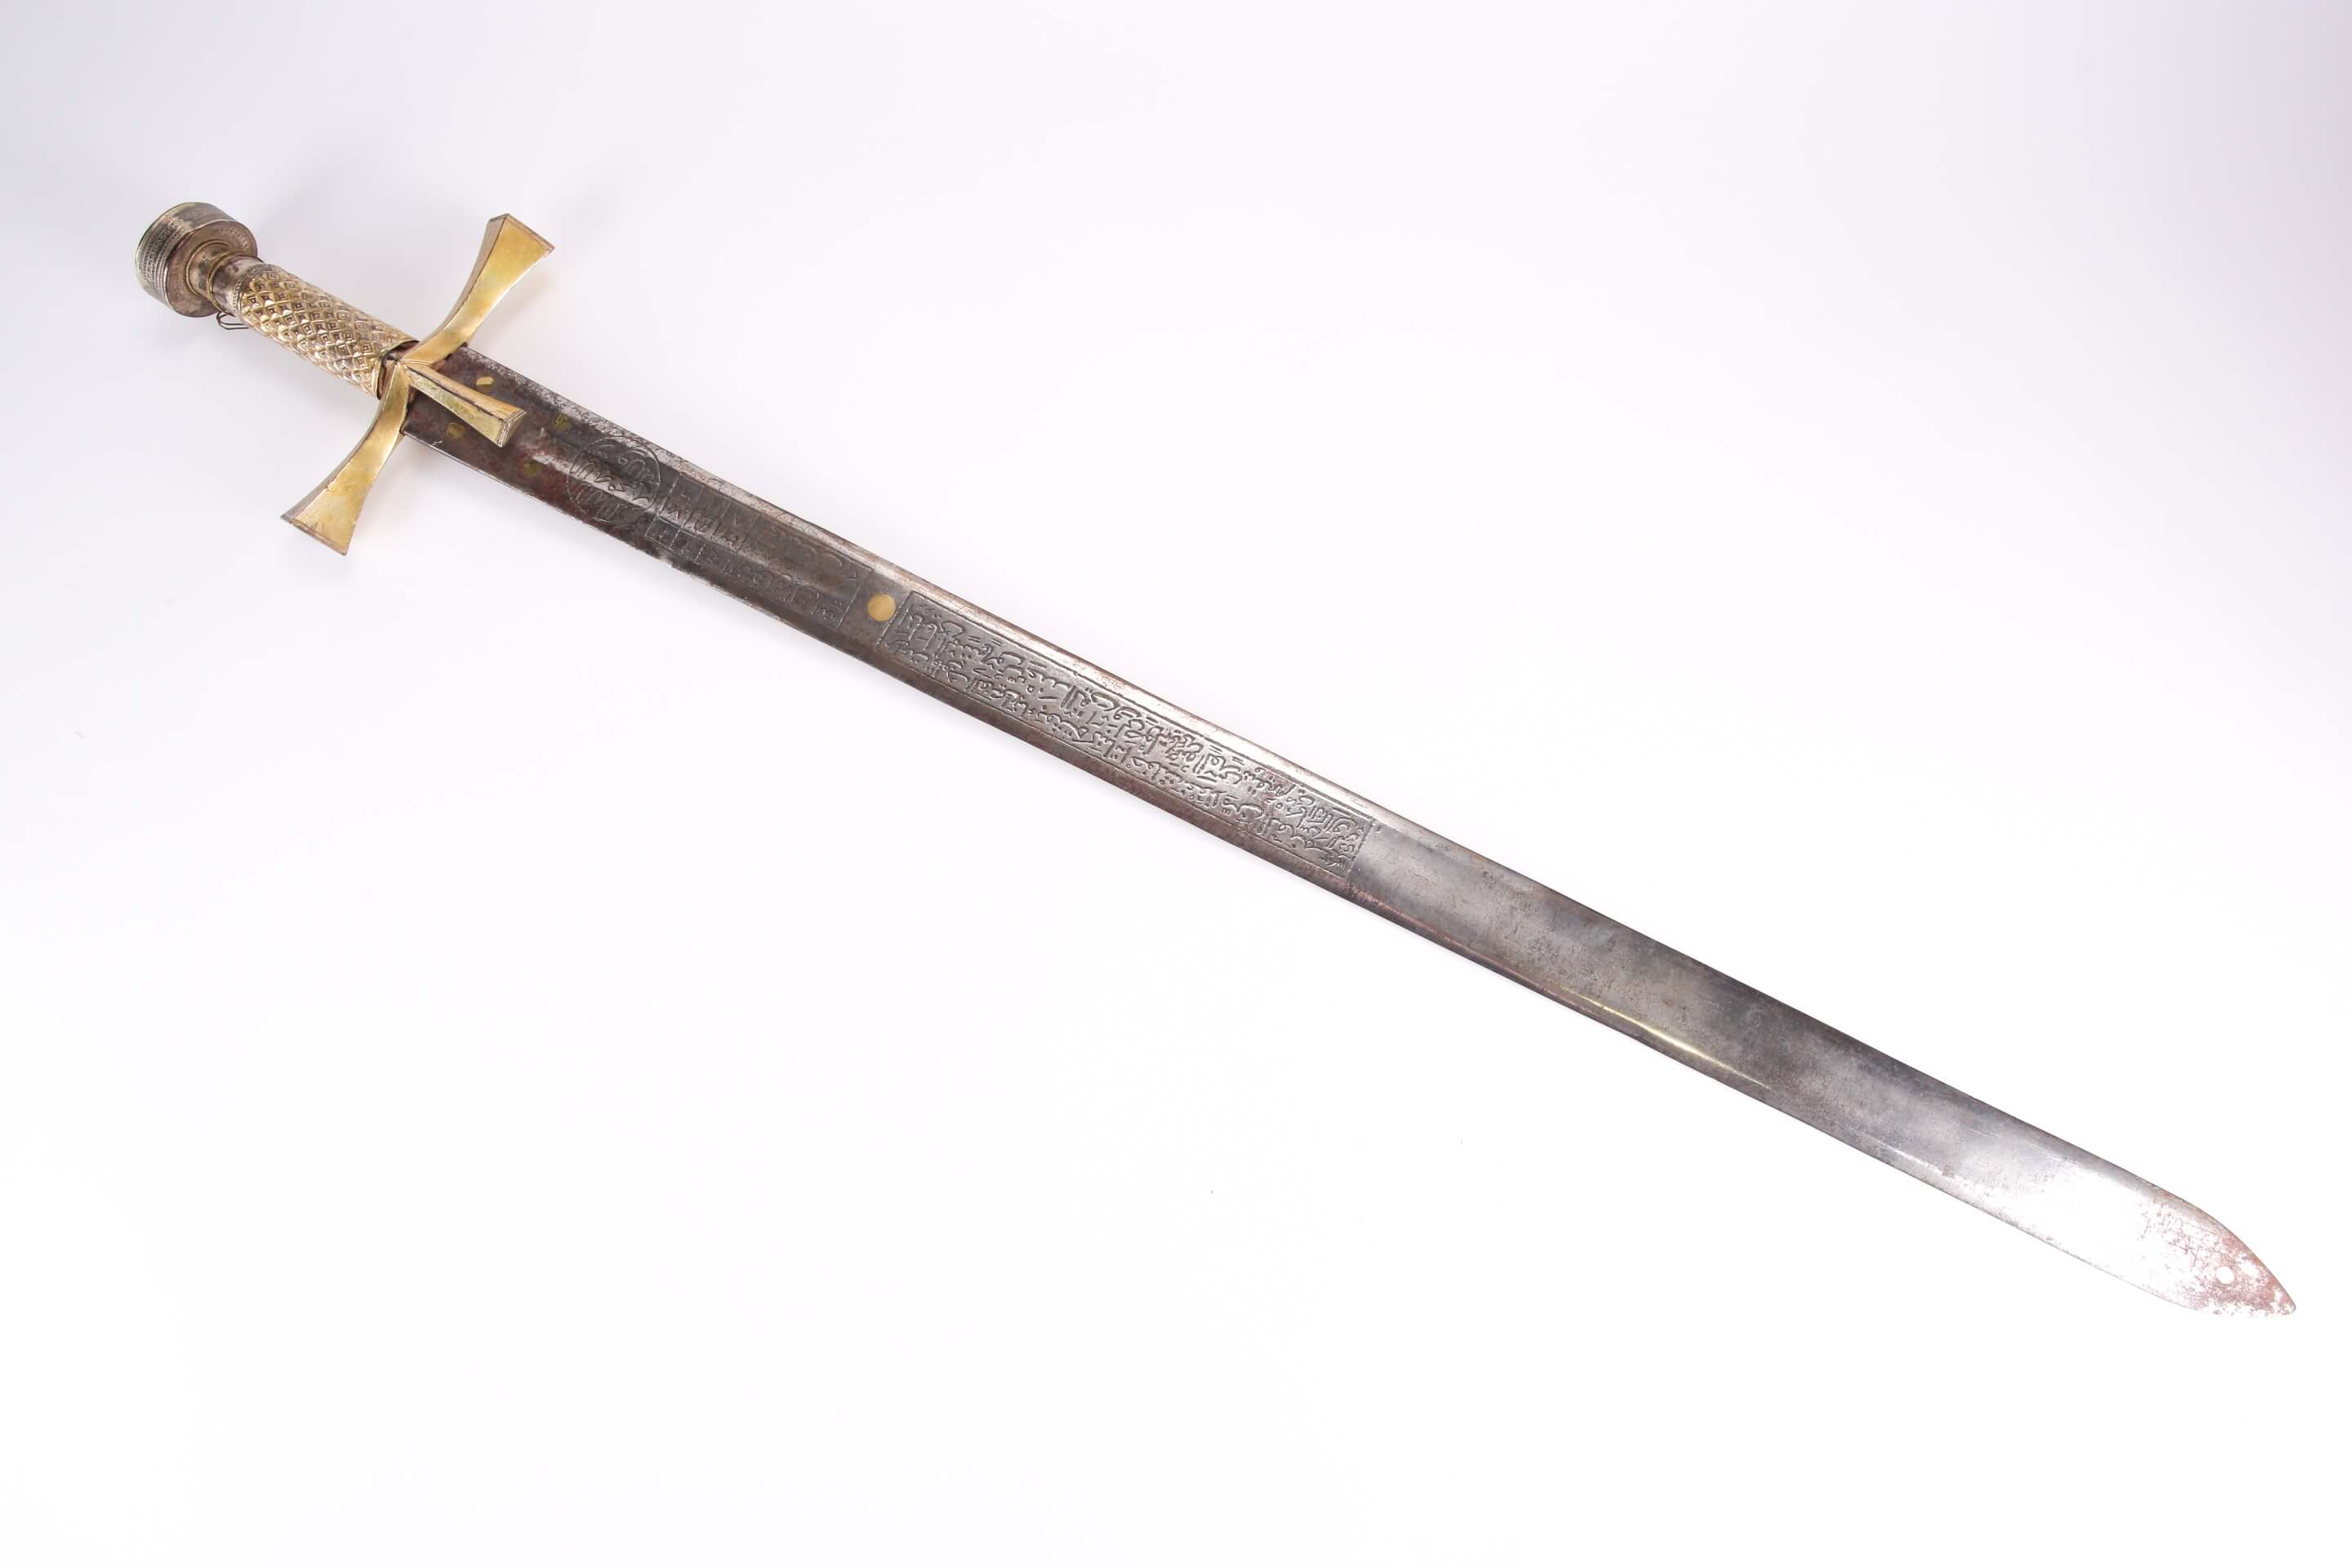 A 19th century Sudanese Kaskara sword